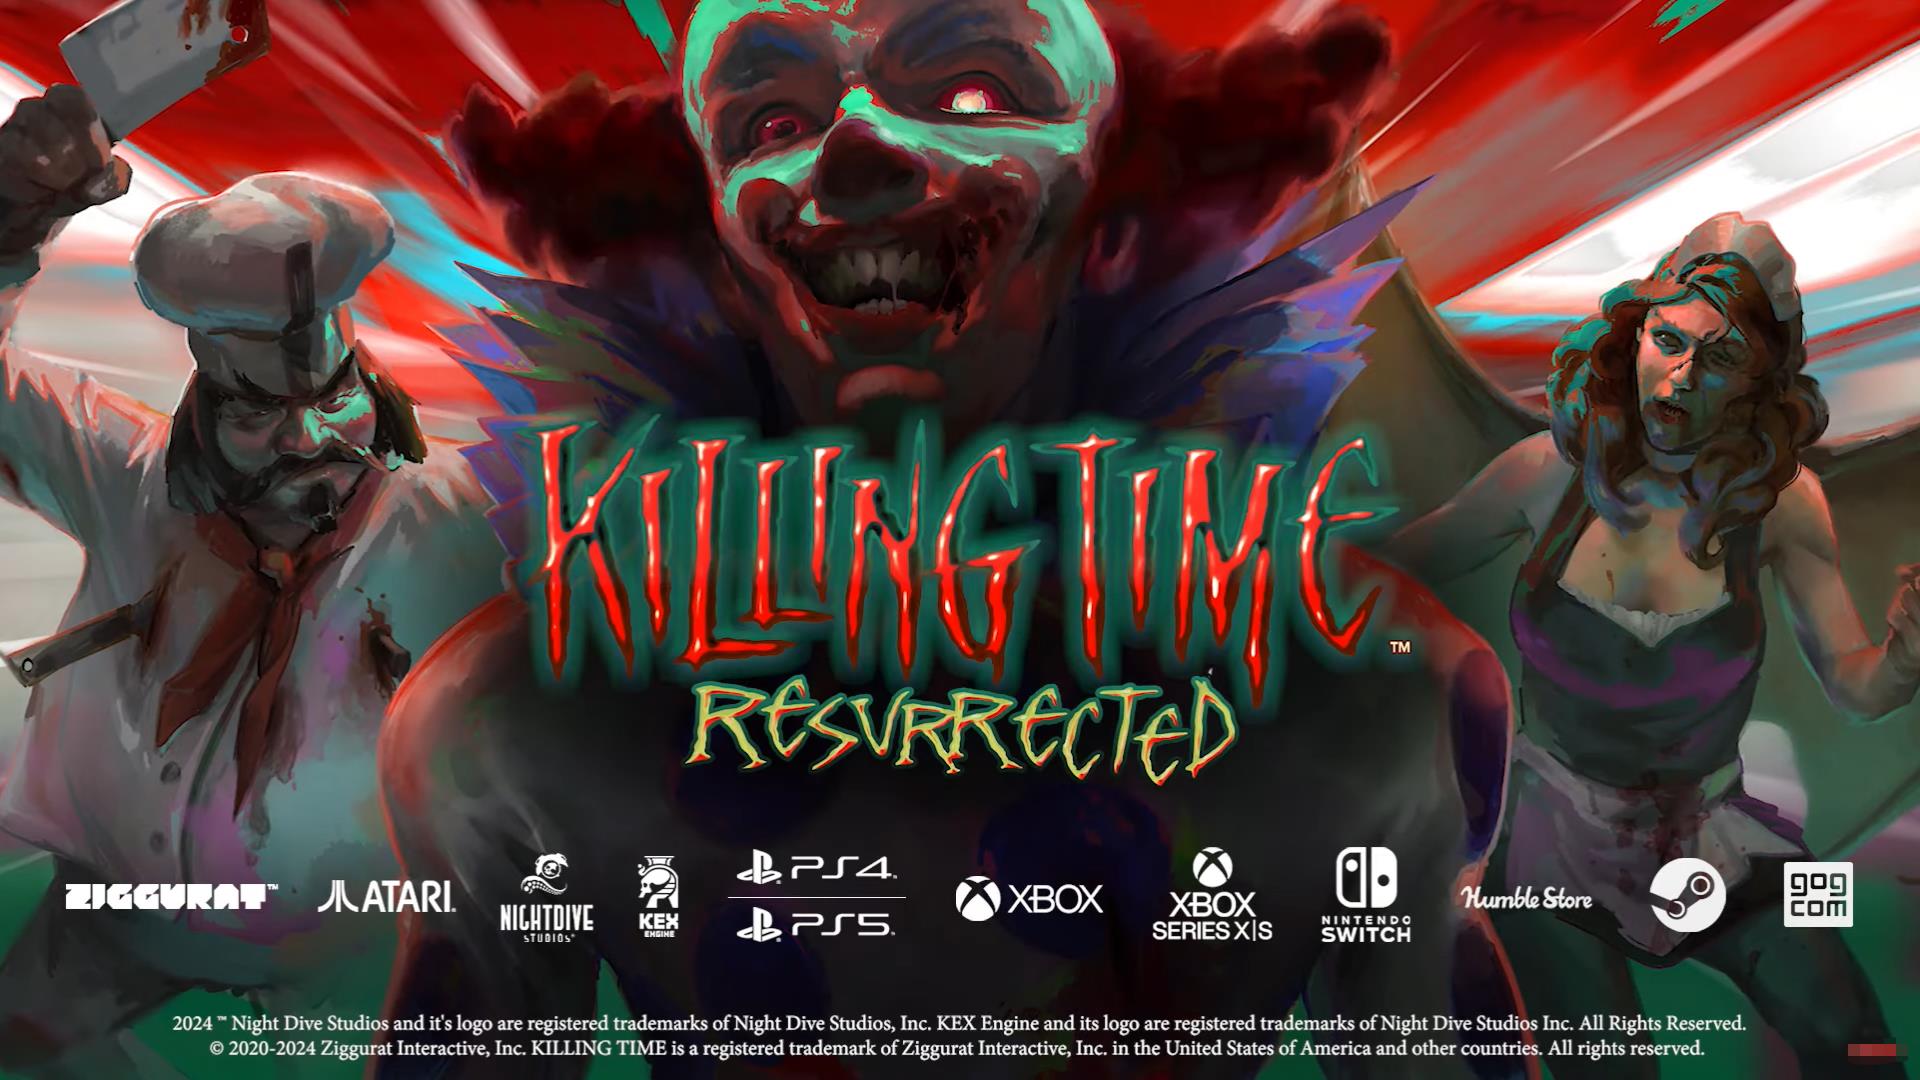 经典鬼屋射击游戏《Killing Time》将迎来全新重置版“Killing Time：Resurrected”